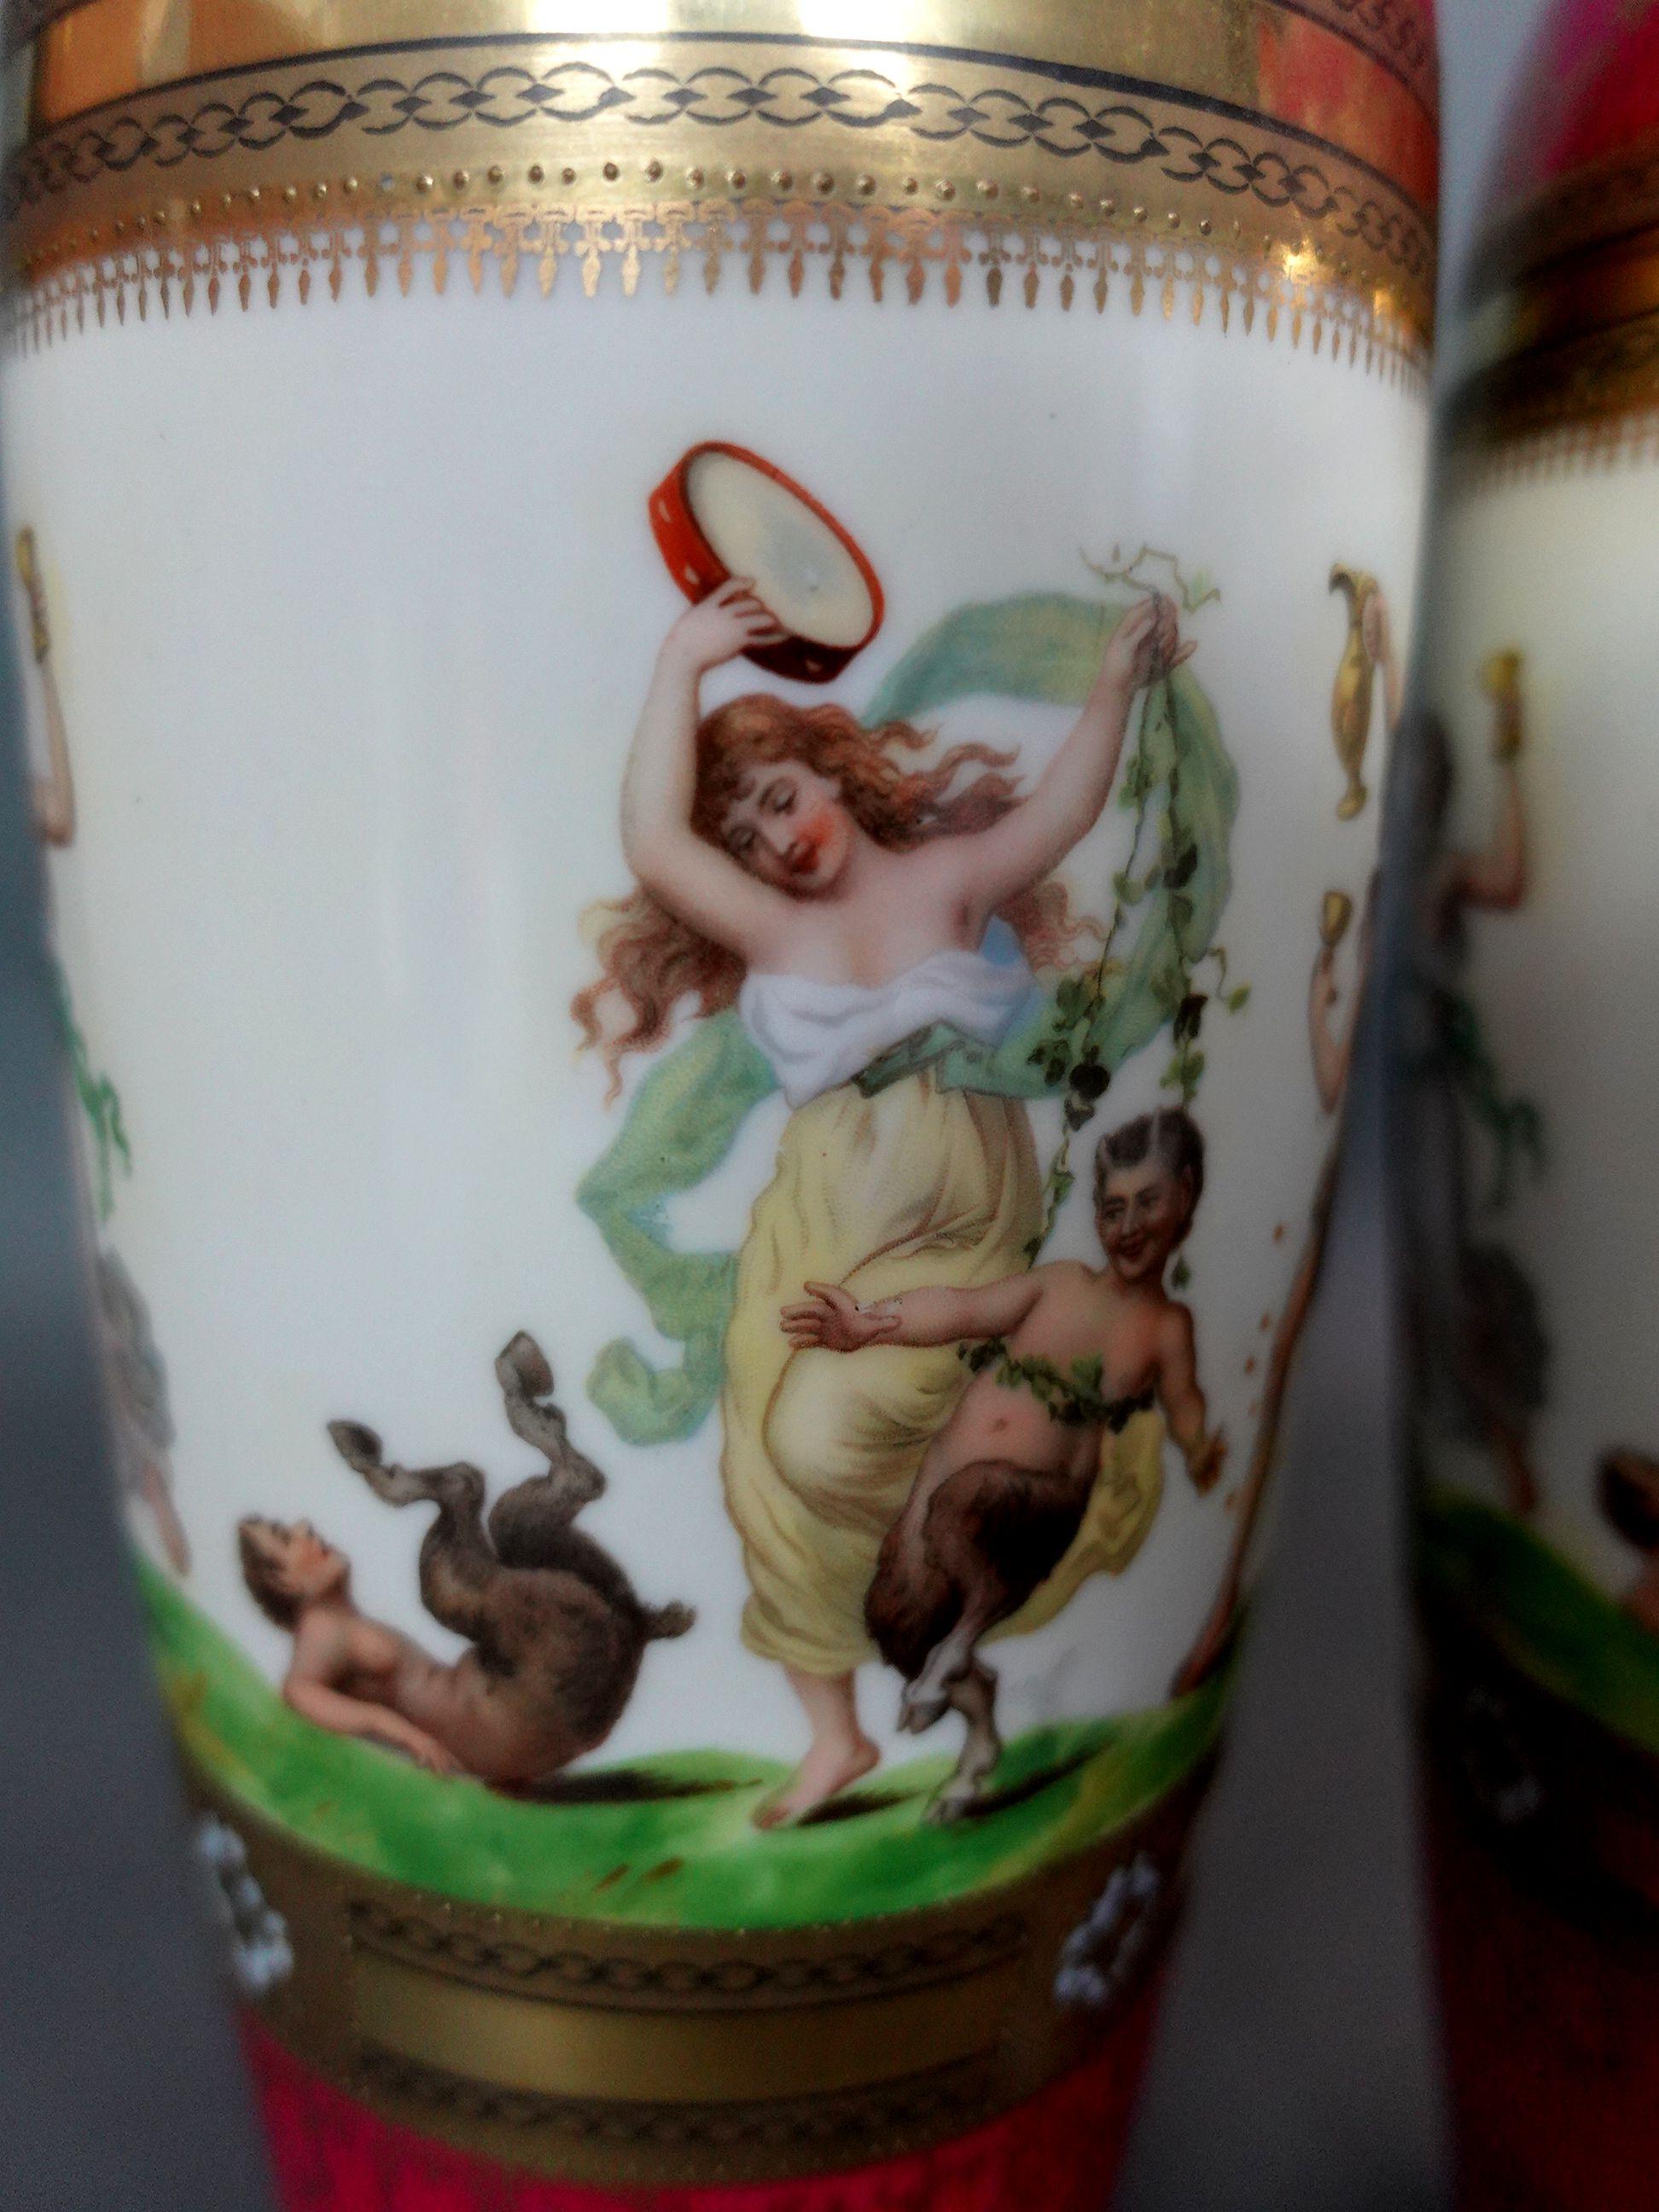 Antique 19th Century Pair of Bacchanal Festive Procession German Vase 